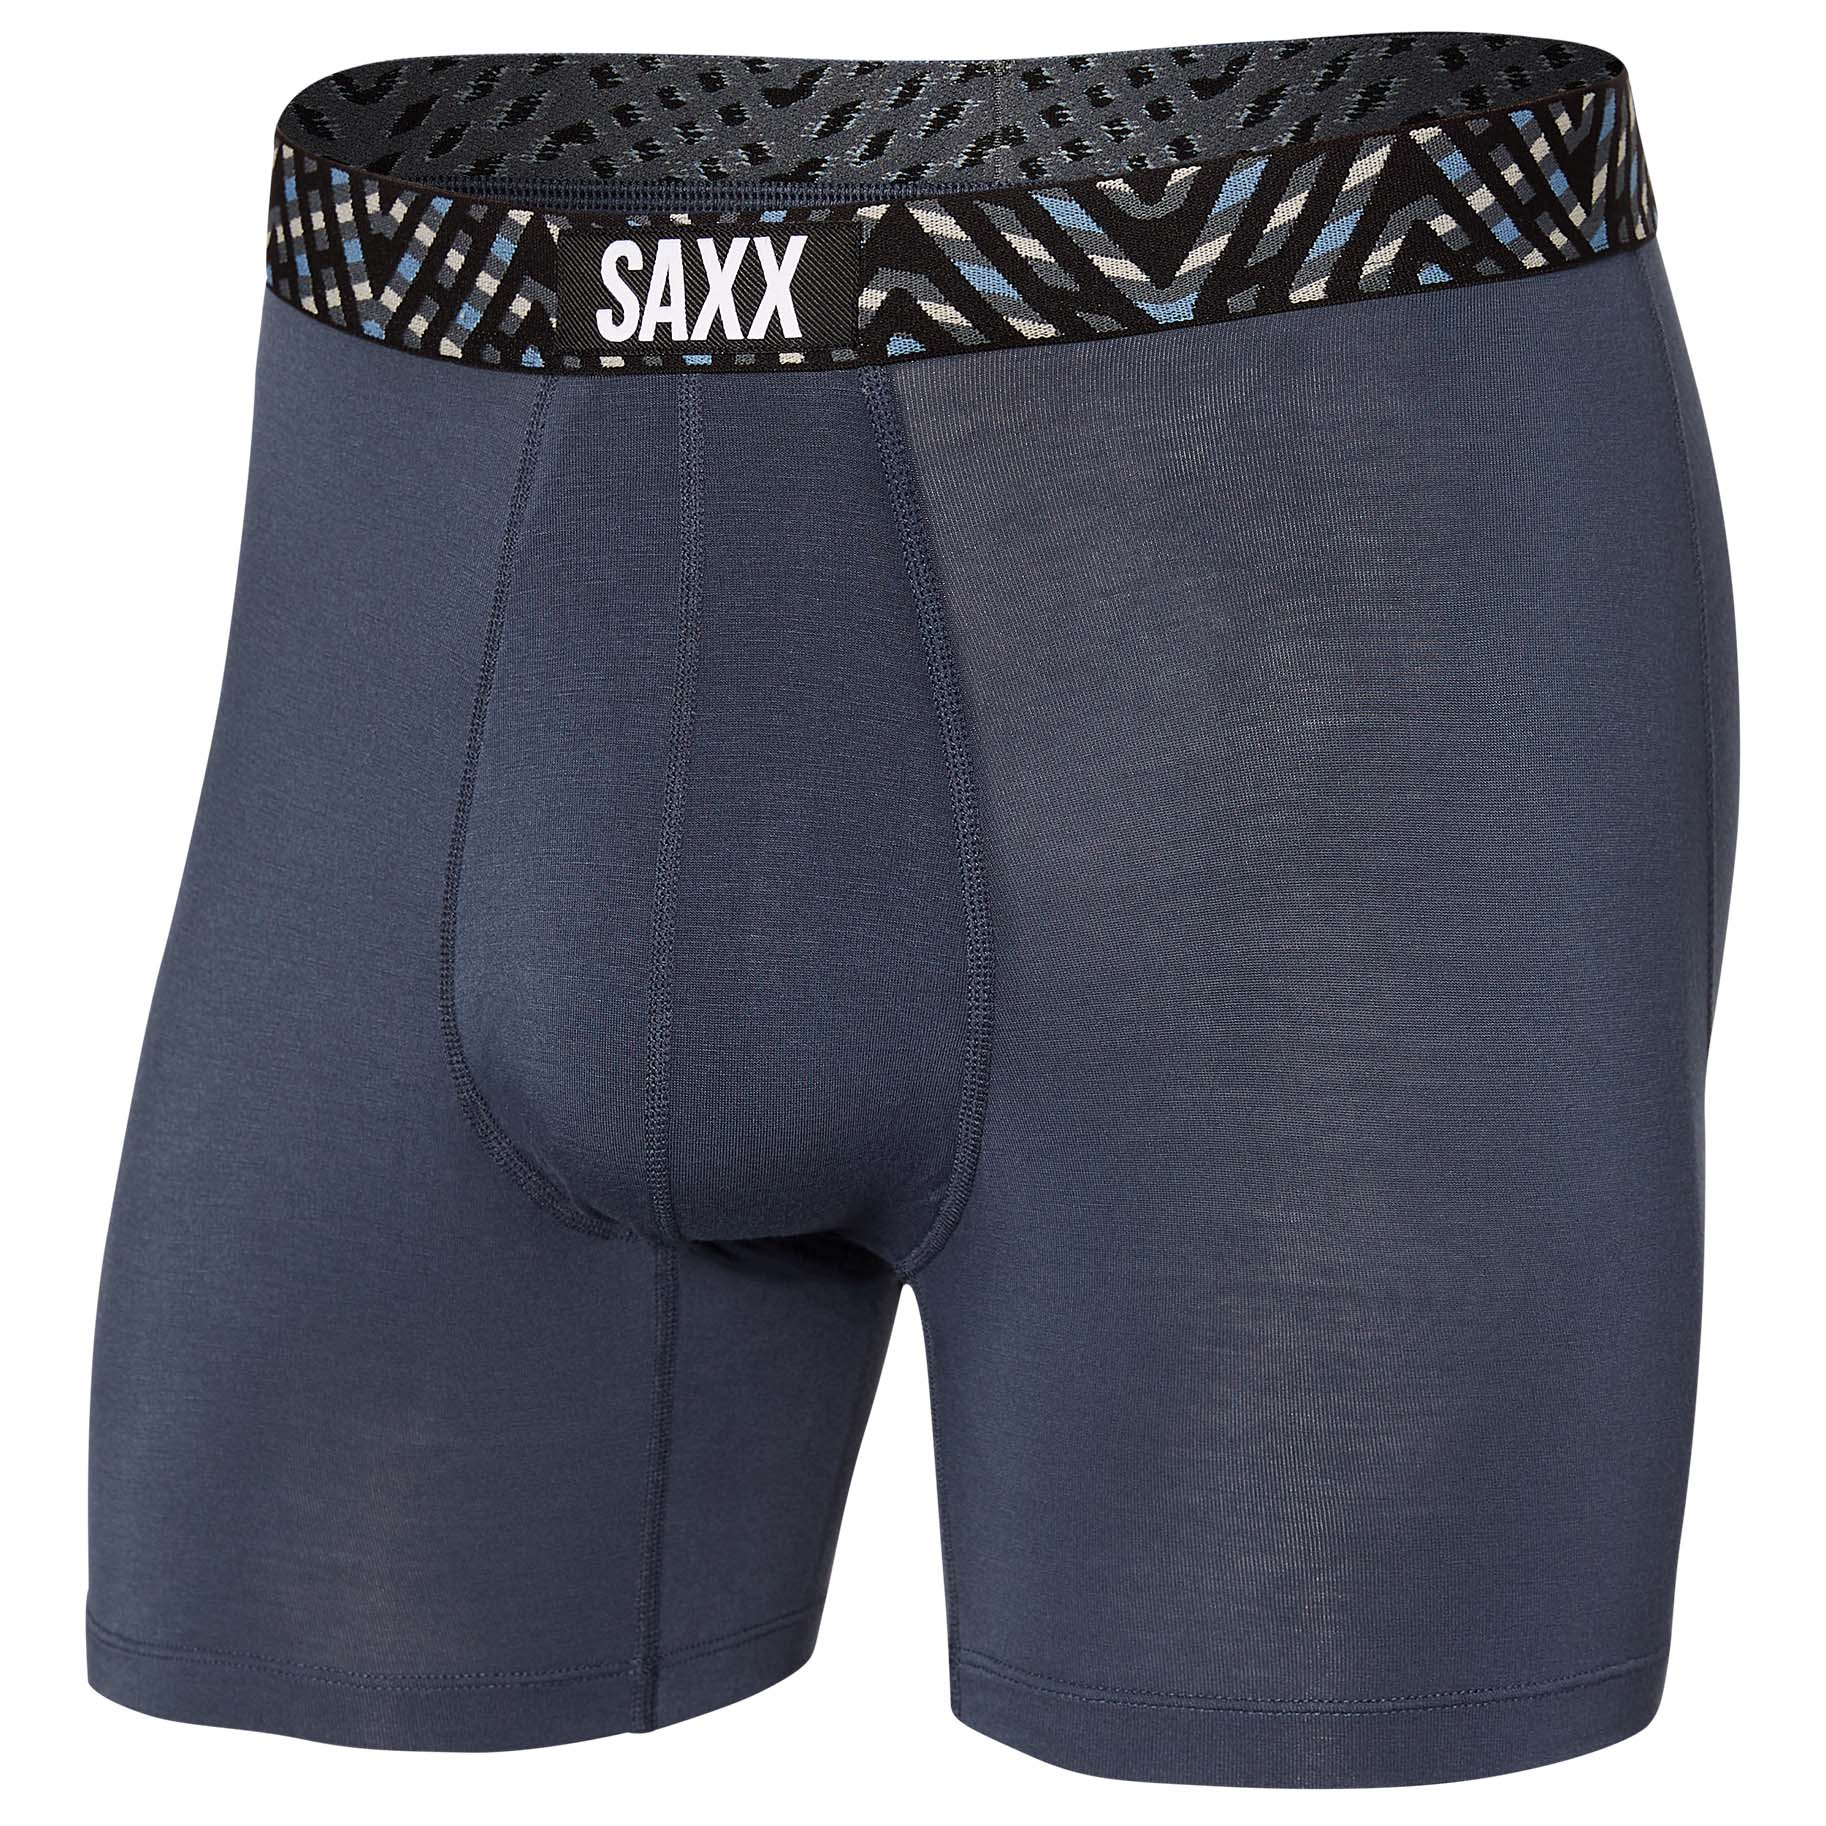 Saxx Vibe Briefs Slim Fit Boxer Shorts